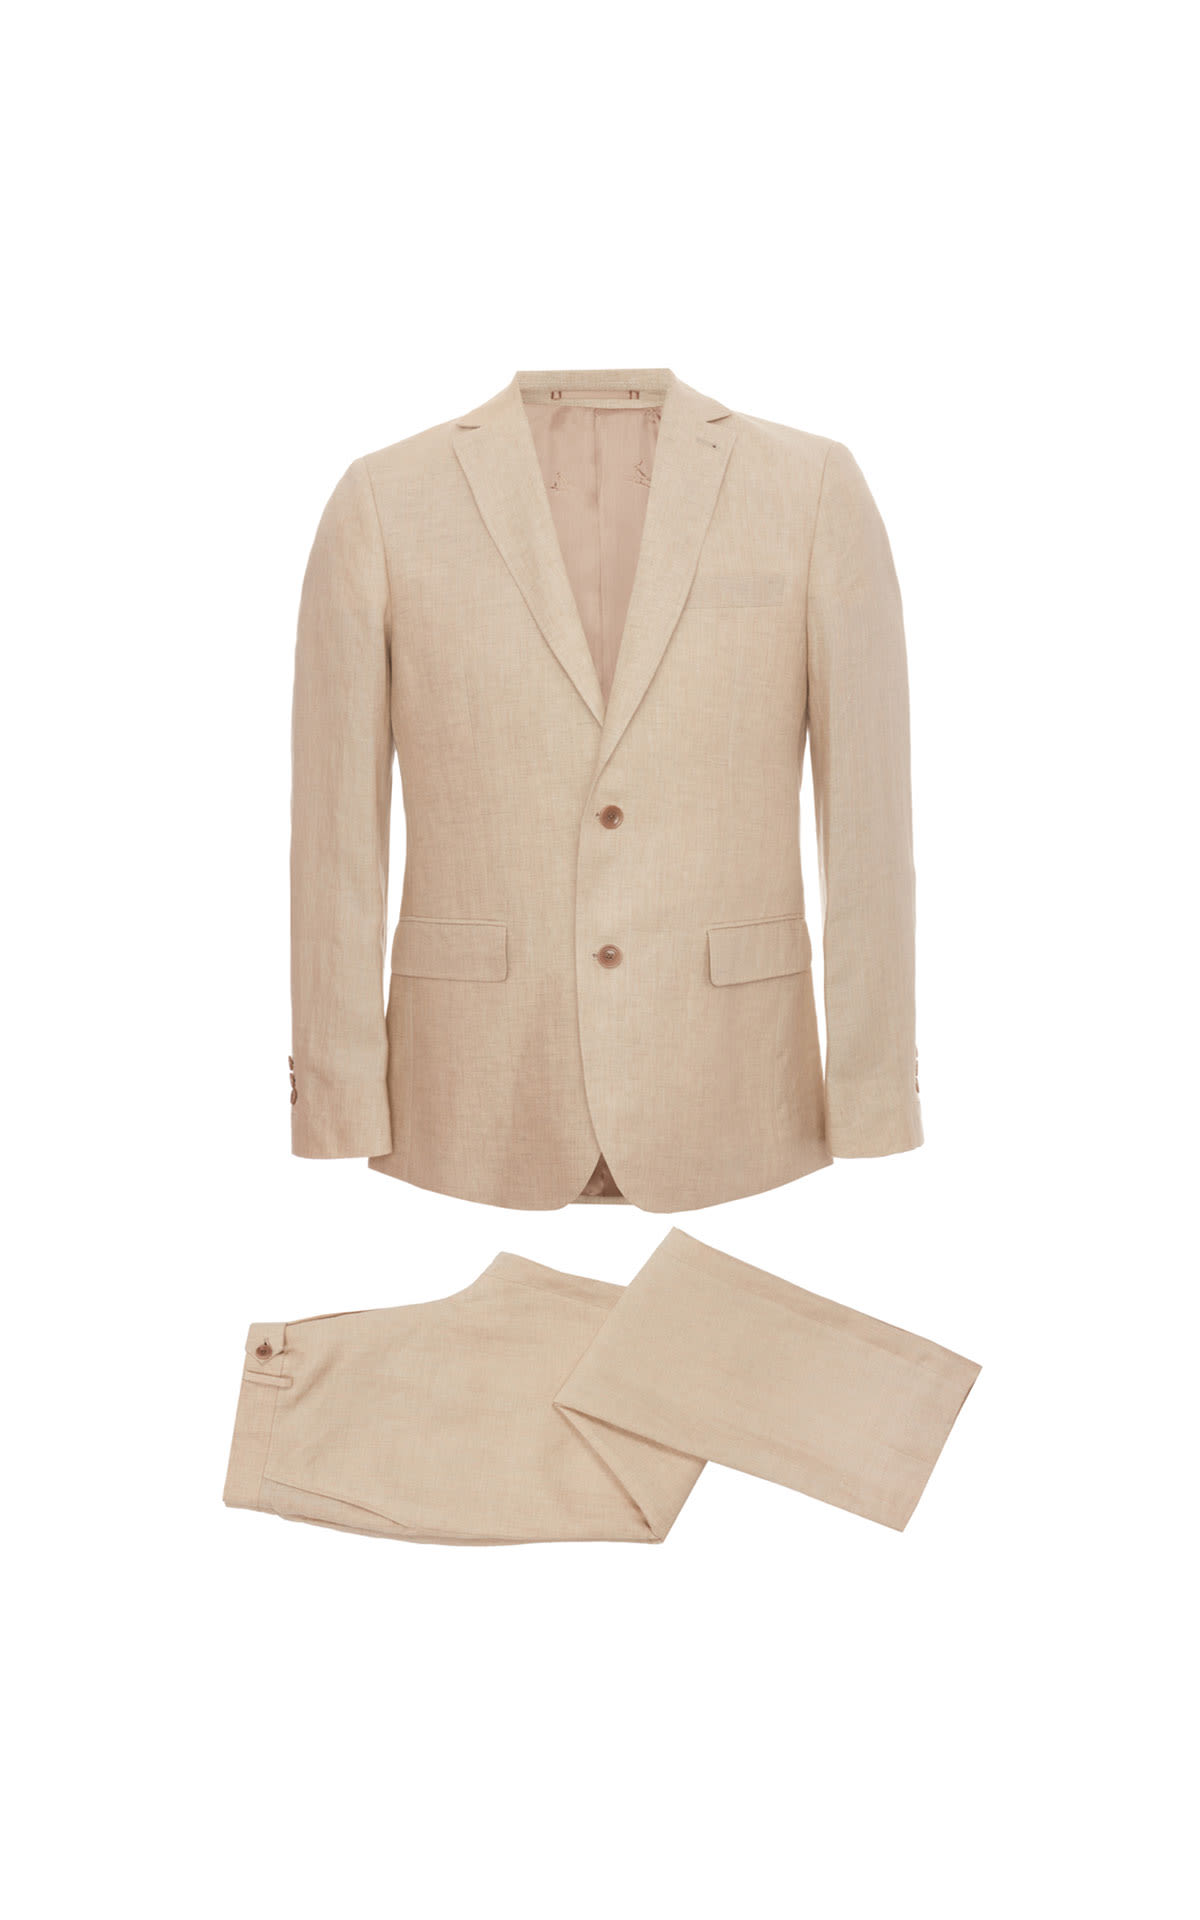 Charles Trywhitt Italian linen suit from Bicester Village